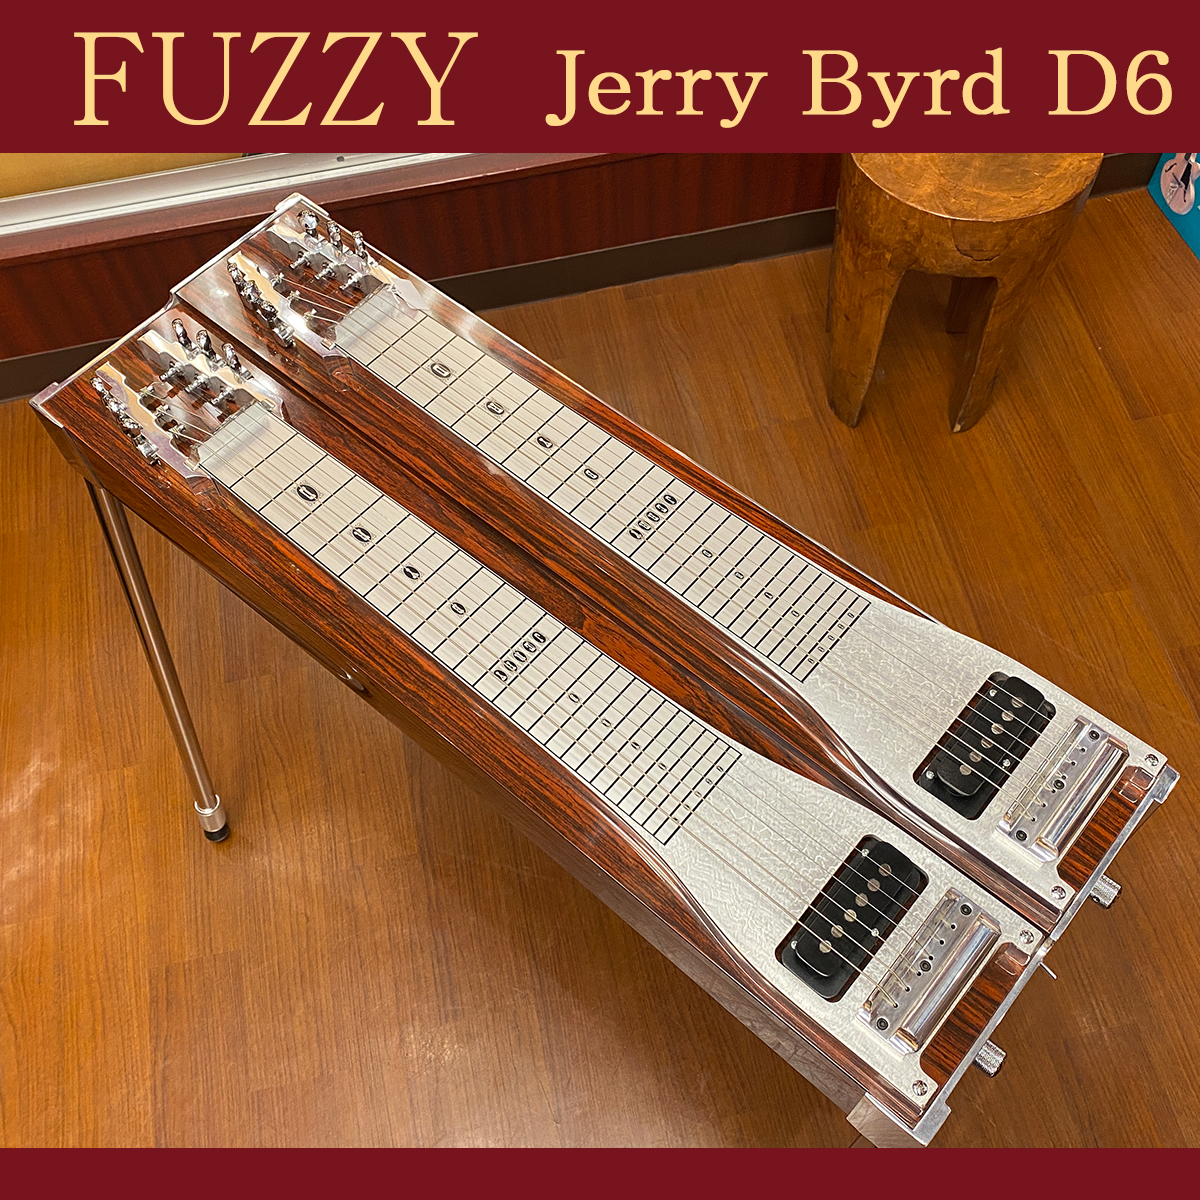 Jerry byrd D6